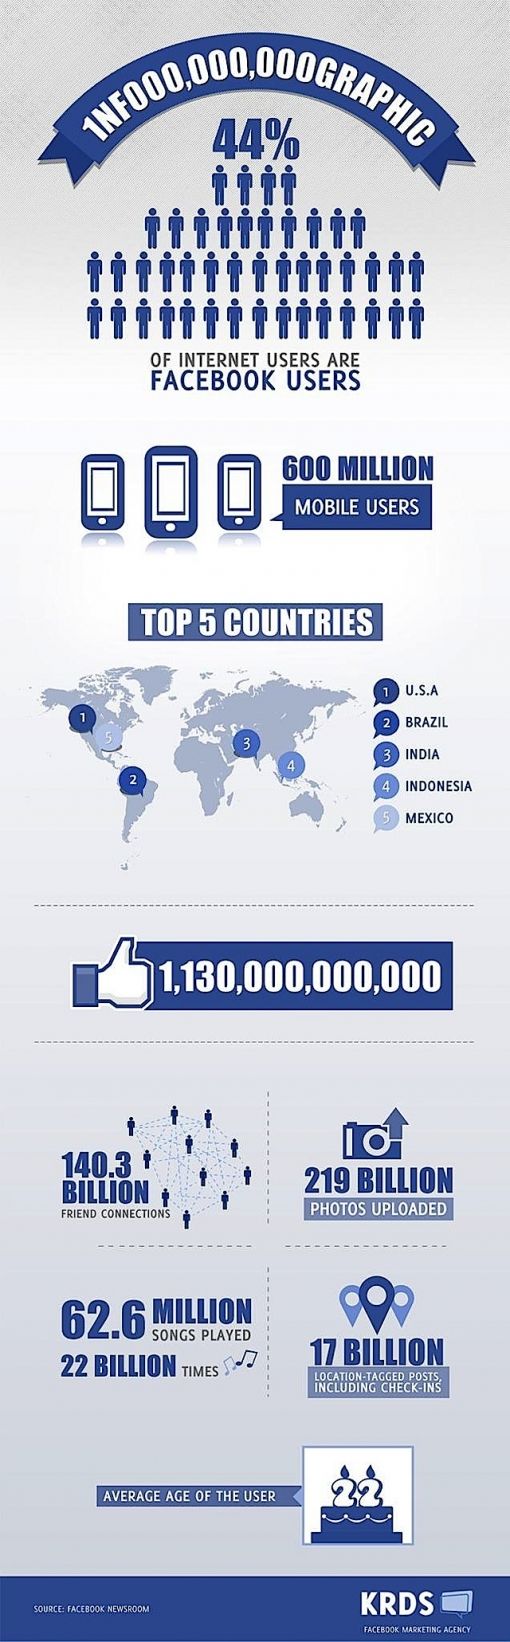 facebook-infographic.jpg